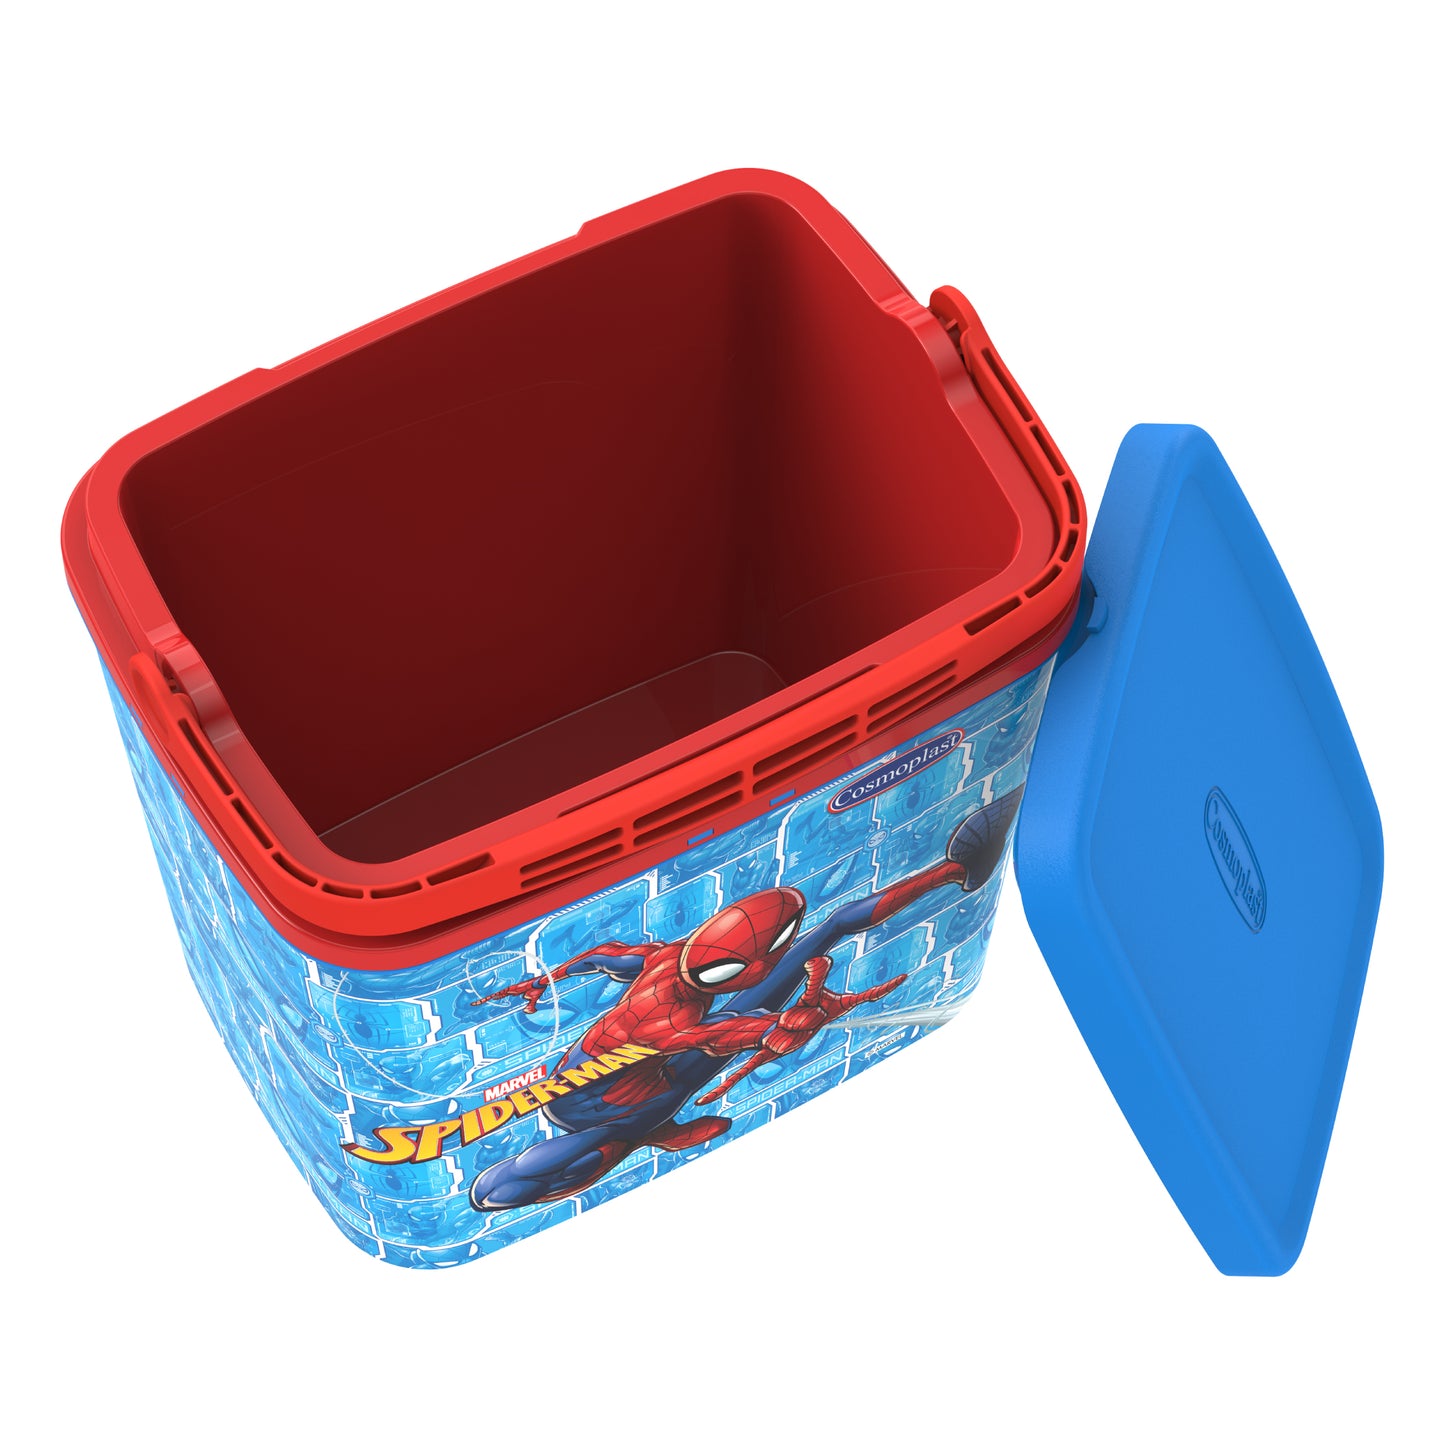 Cosmoplast Disney Marvel Spider Man ChillBox Lunch Box Cooler Icebox 4 Liters 